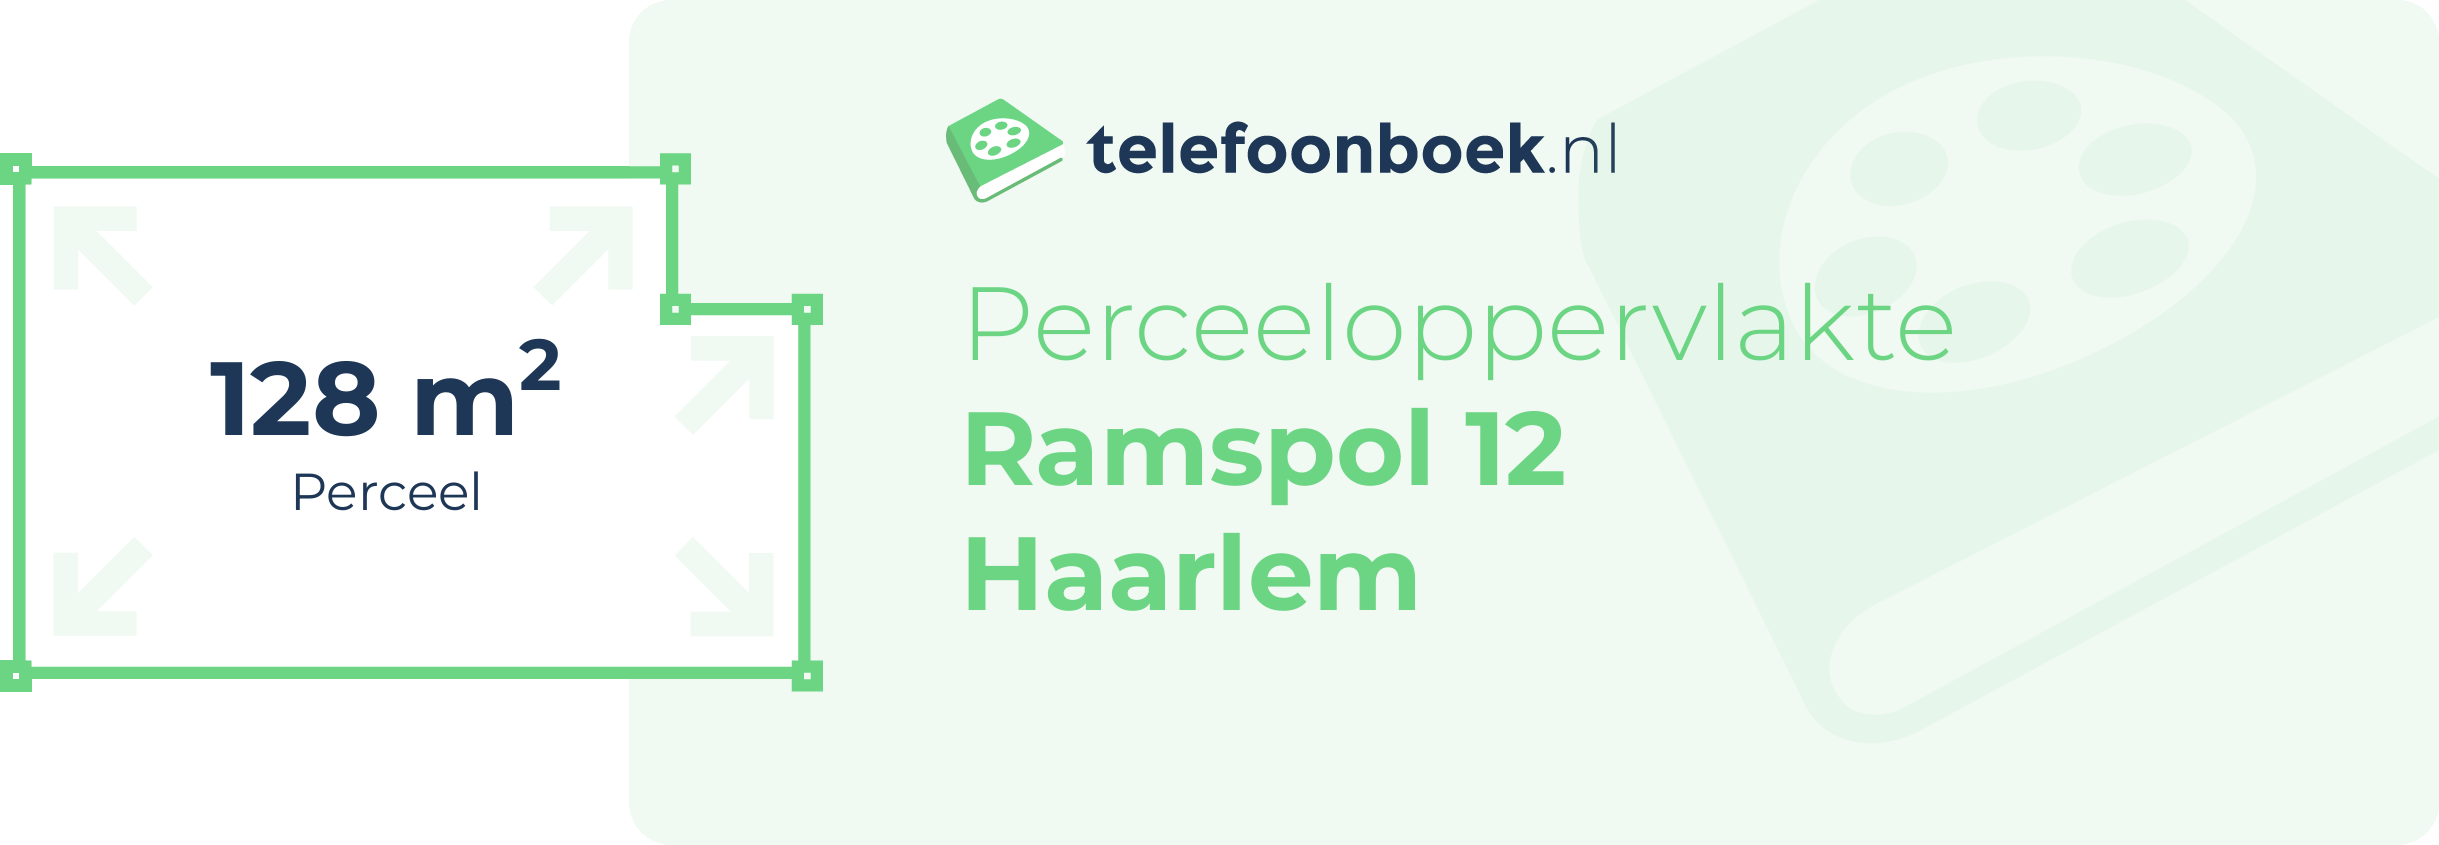 Perceeloppervlakte Ramspol 12 Haarlem